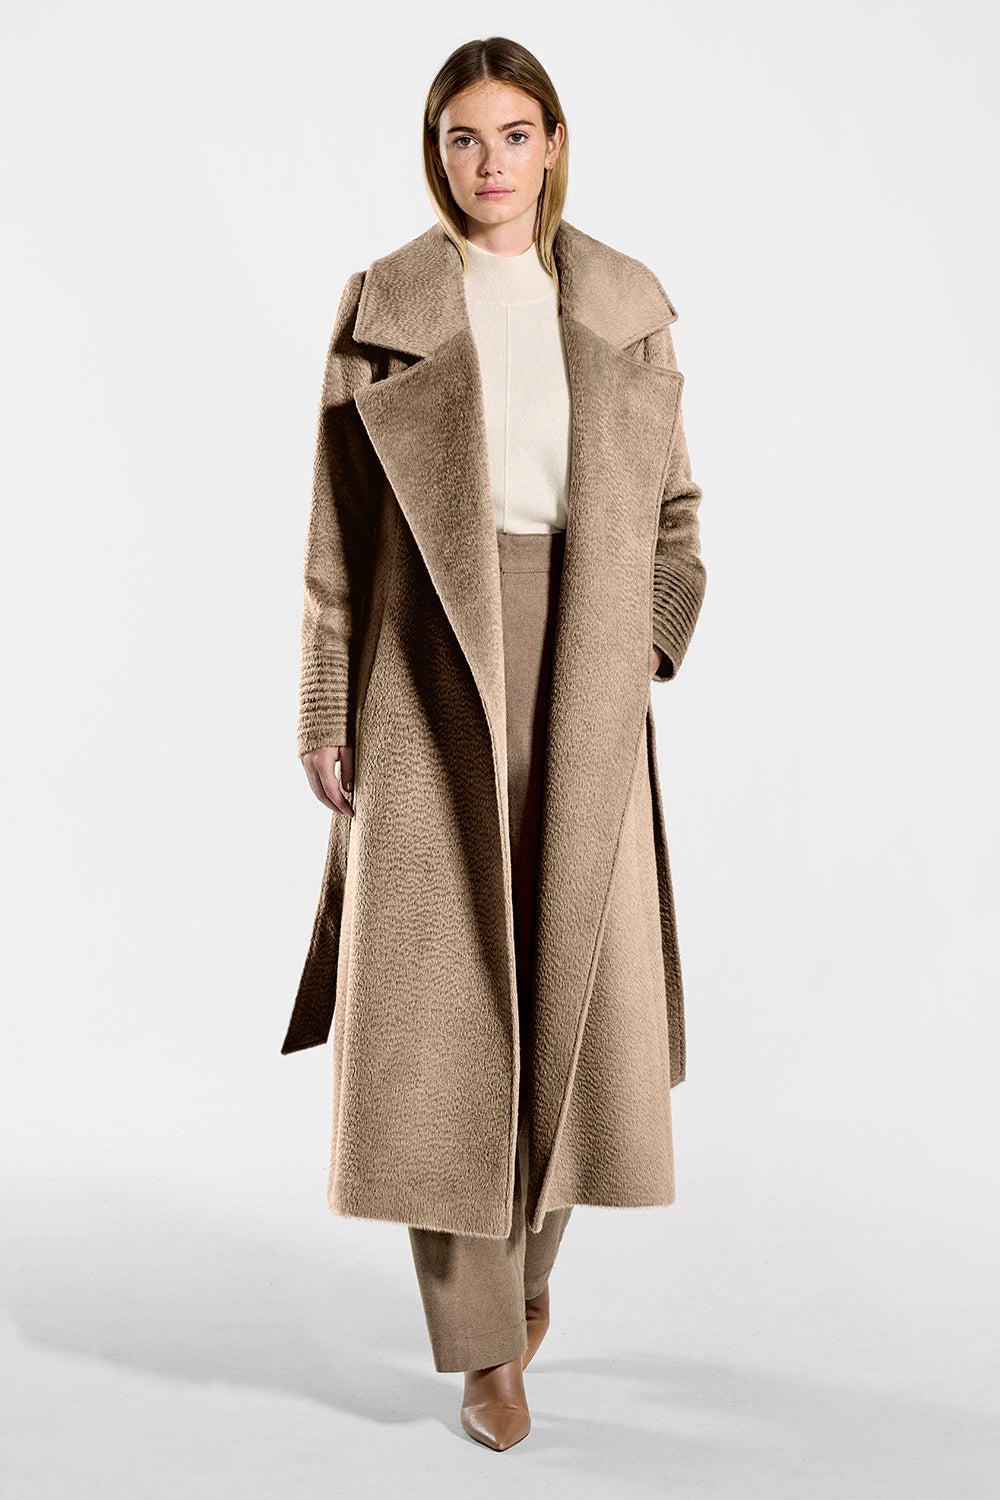 Suri Alpaca Long Notched Collar Wrap Hazelnut Coat | SENTALER